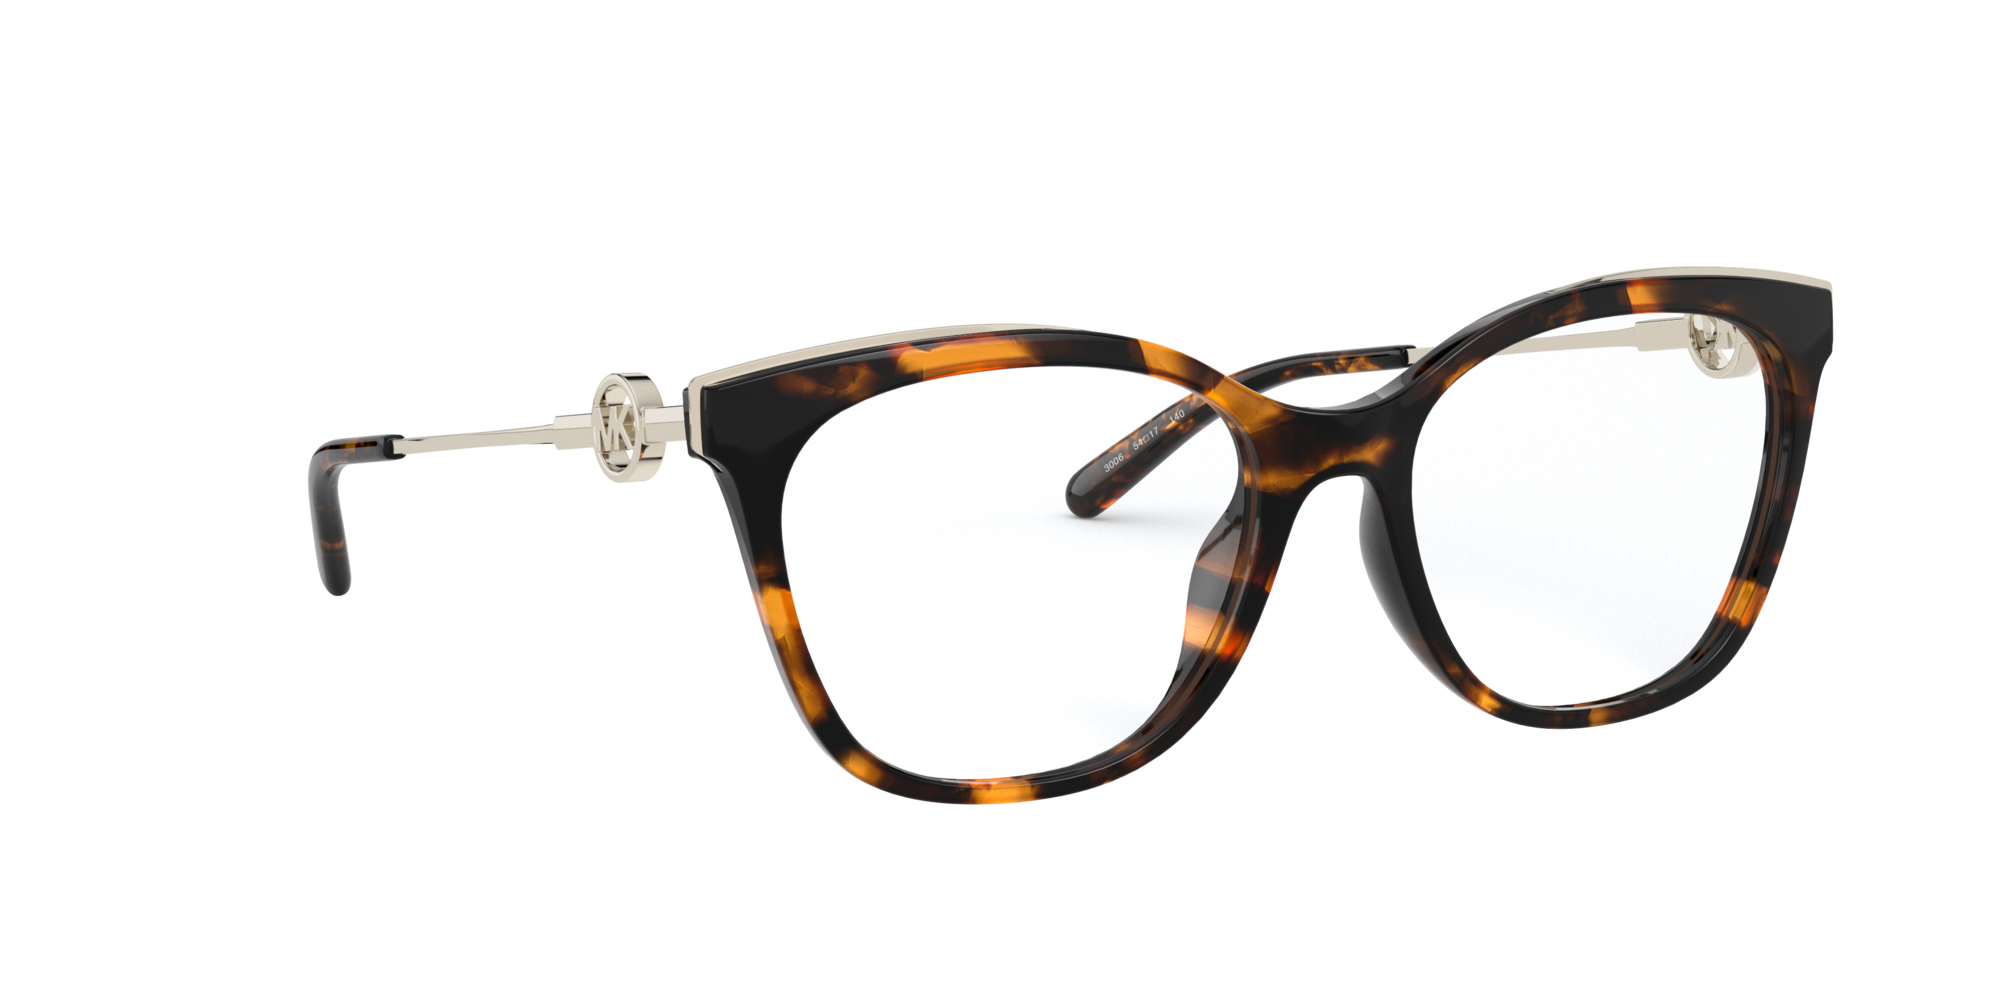 Angle_Right01 Michael Kors MK 4076U (3006) Glasses Transparent / Tortoise Shell